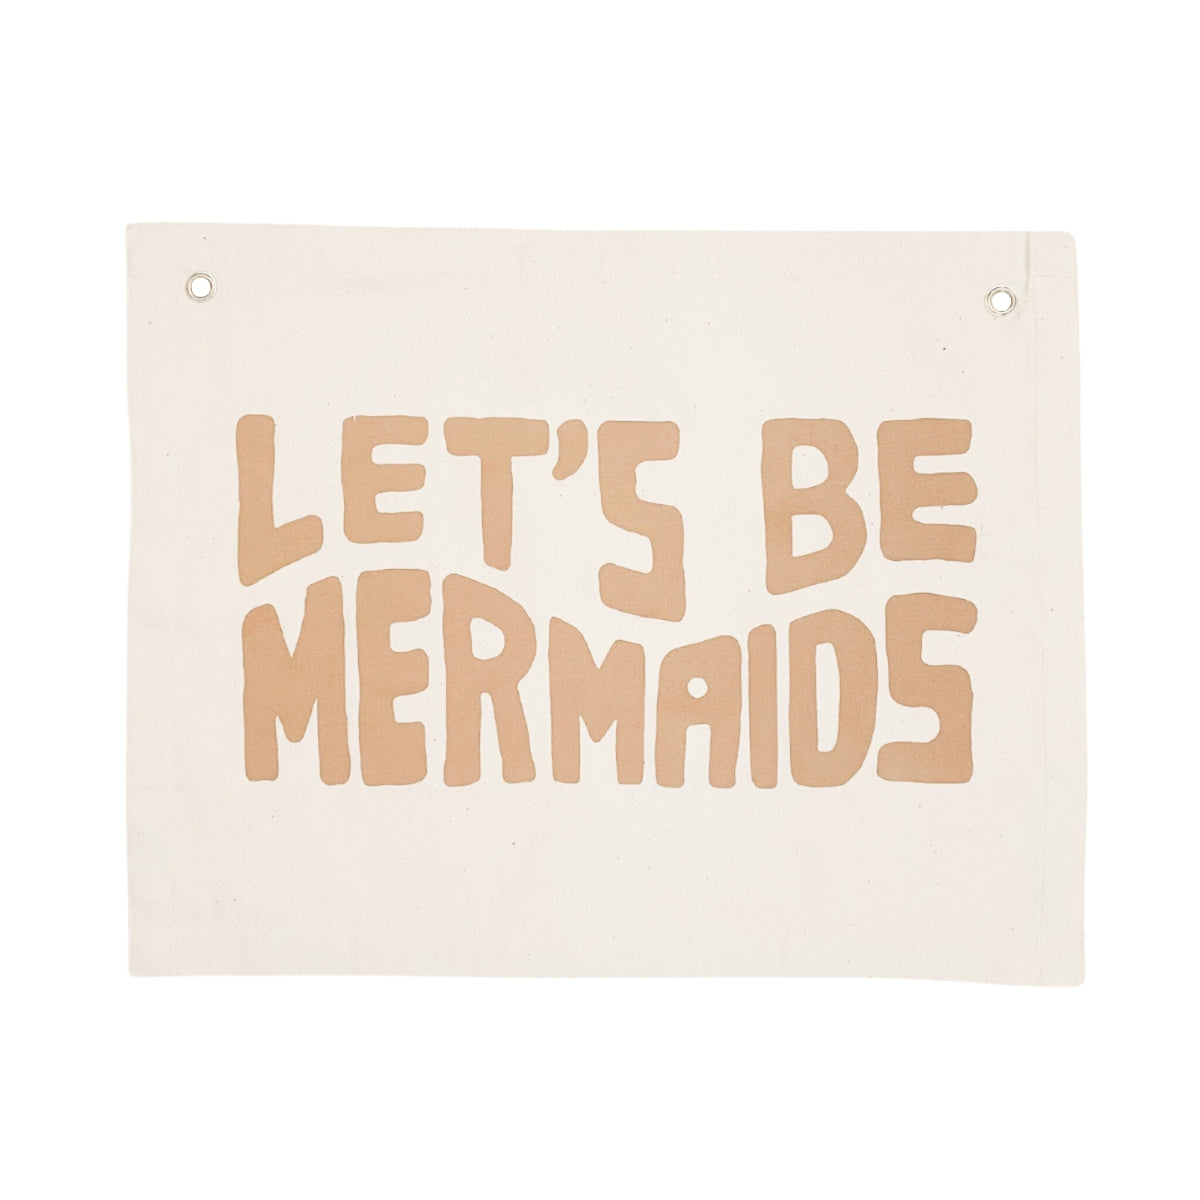 let's be mermaids clay banner